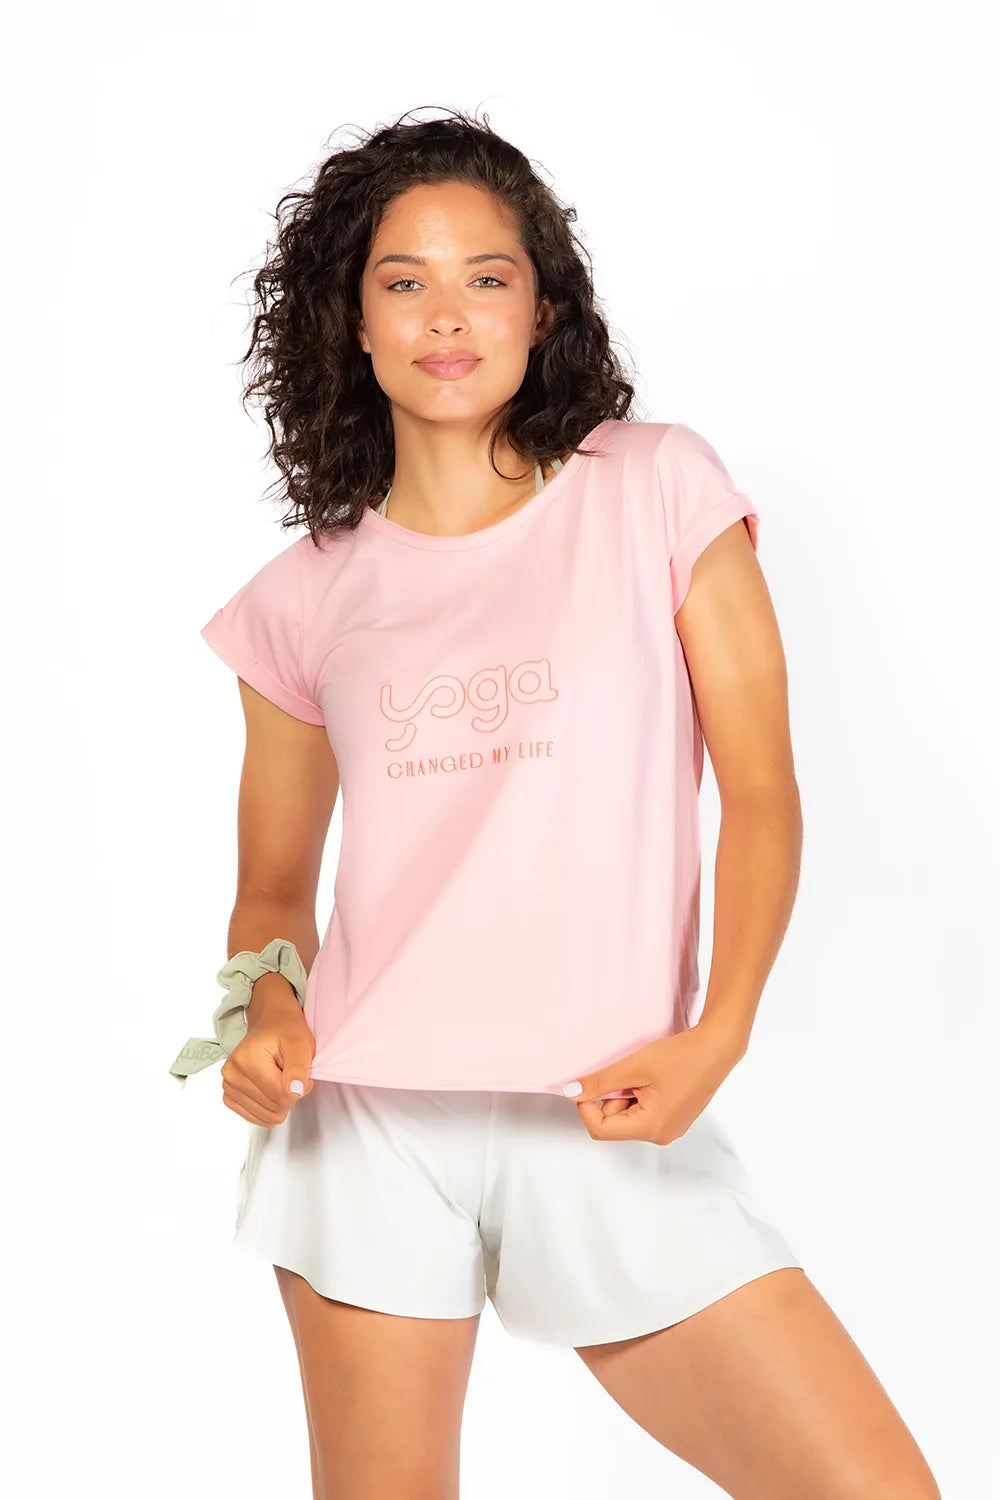 Camiseta Tshirt Yoga Changed, modelo básico en color rosa Rose Shadow de Yogimi. Camiseta manga corta homenaje a amantes del yoga. Bordada con la frase &quot;Yoga Changed My Life&quot;.